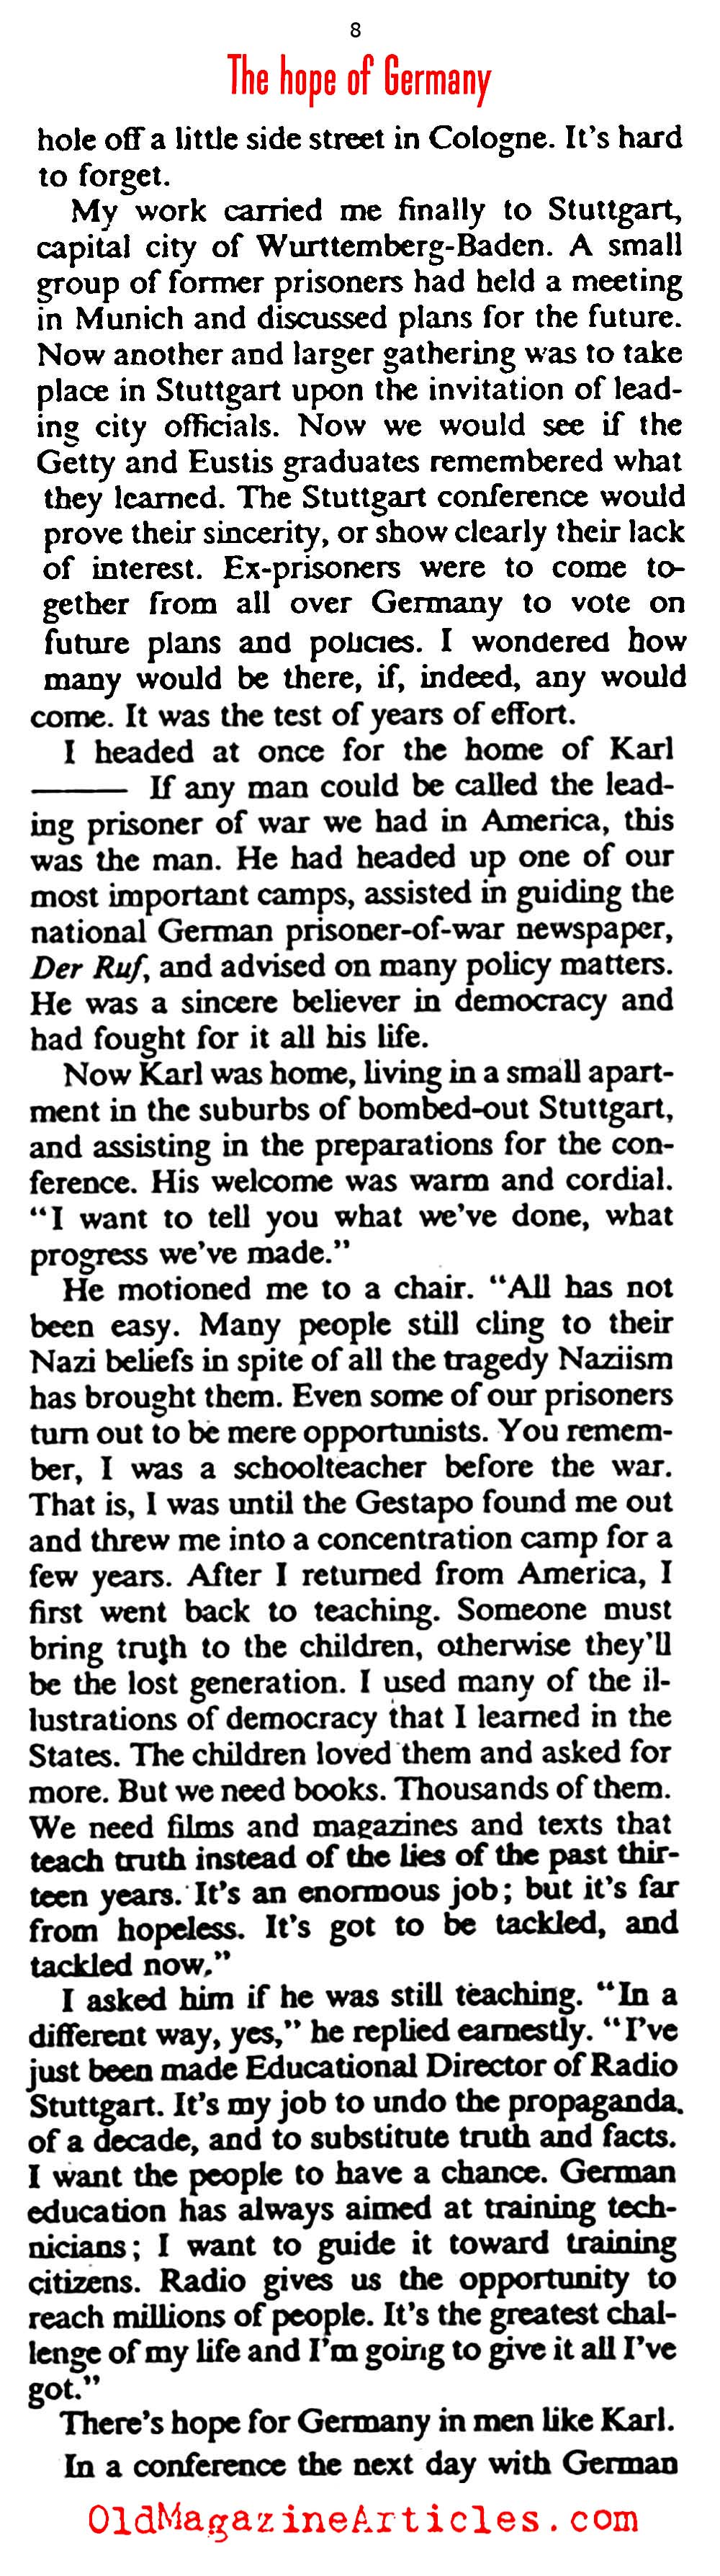 Anti-Nazi POWs Schooled in the Ways of Democracy (American Magazine, 1946)